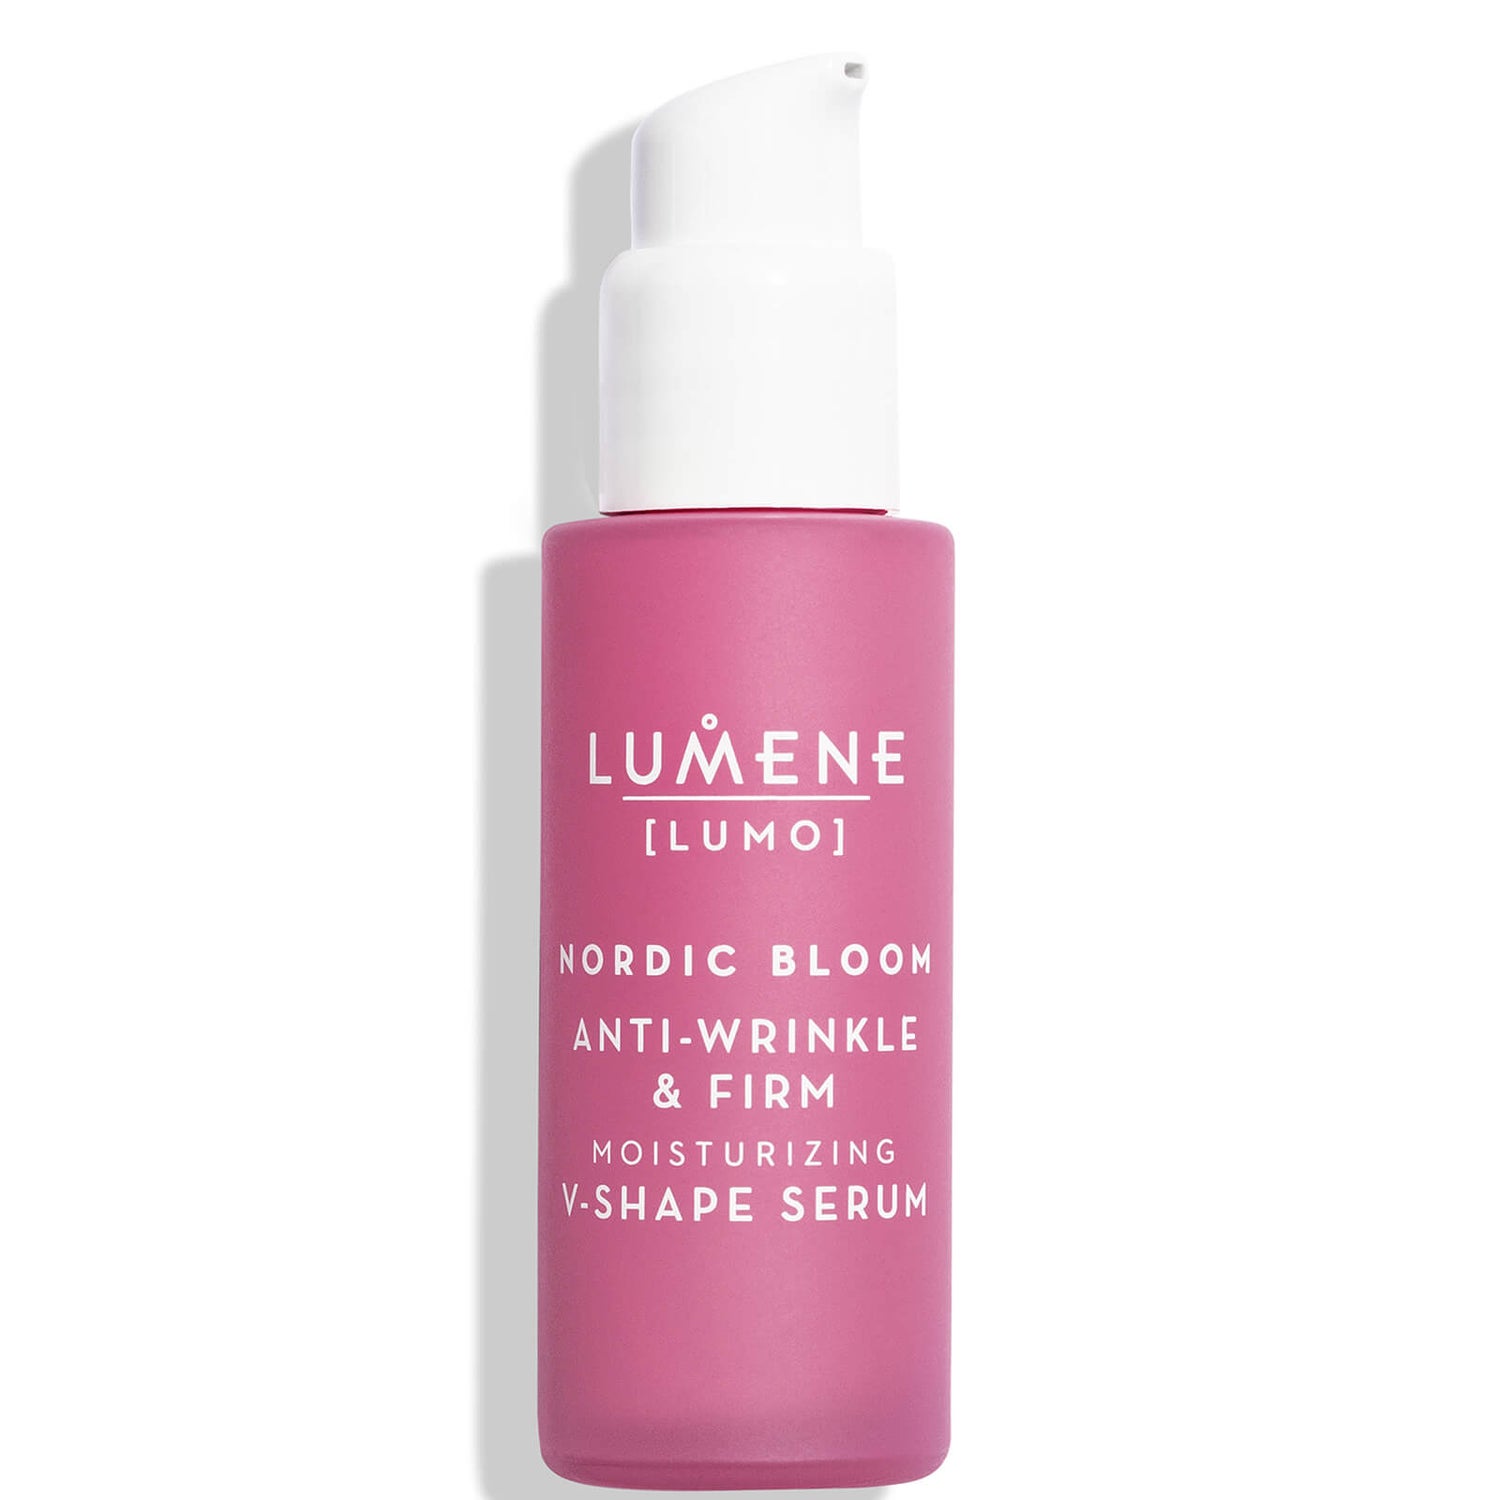 Lumene Nordic Bloom [LUMO] Anti-Wrinkle and Firm Moisturising V-Shape Serum 30ml